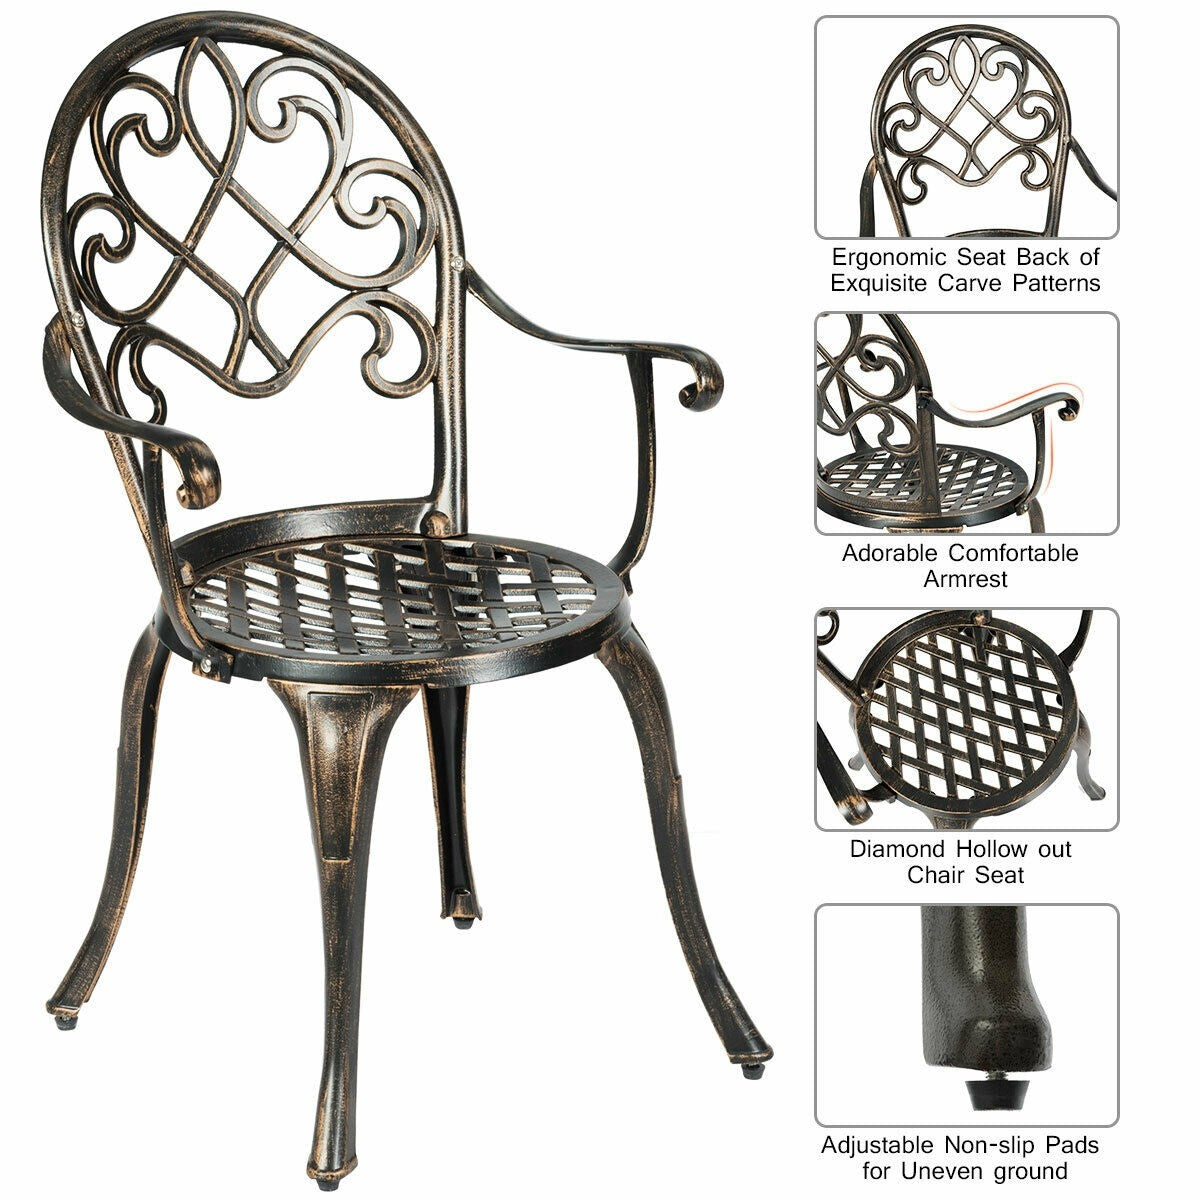 Giantex 3pcs Bistro Table Set Cast Aluminum Outdoor Patio Furniture Set (Antique Bronze)